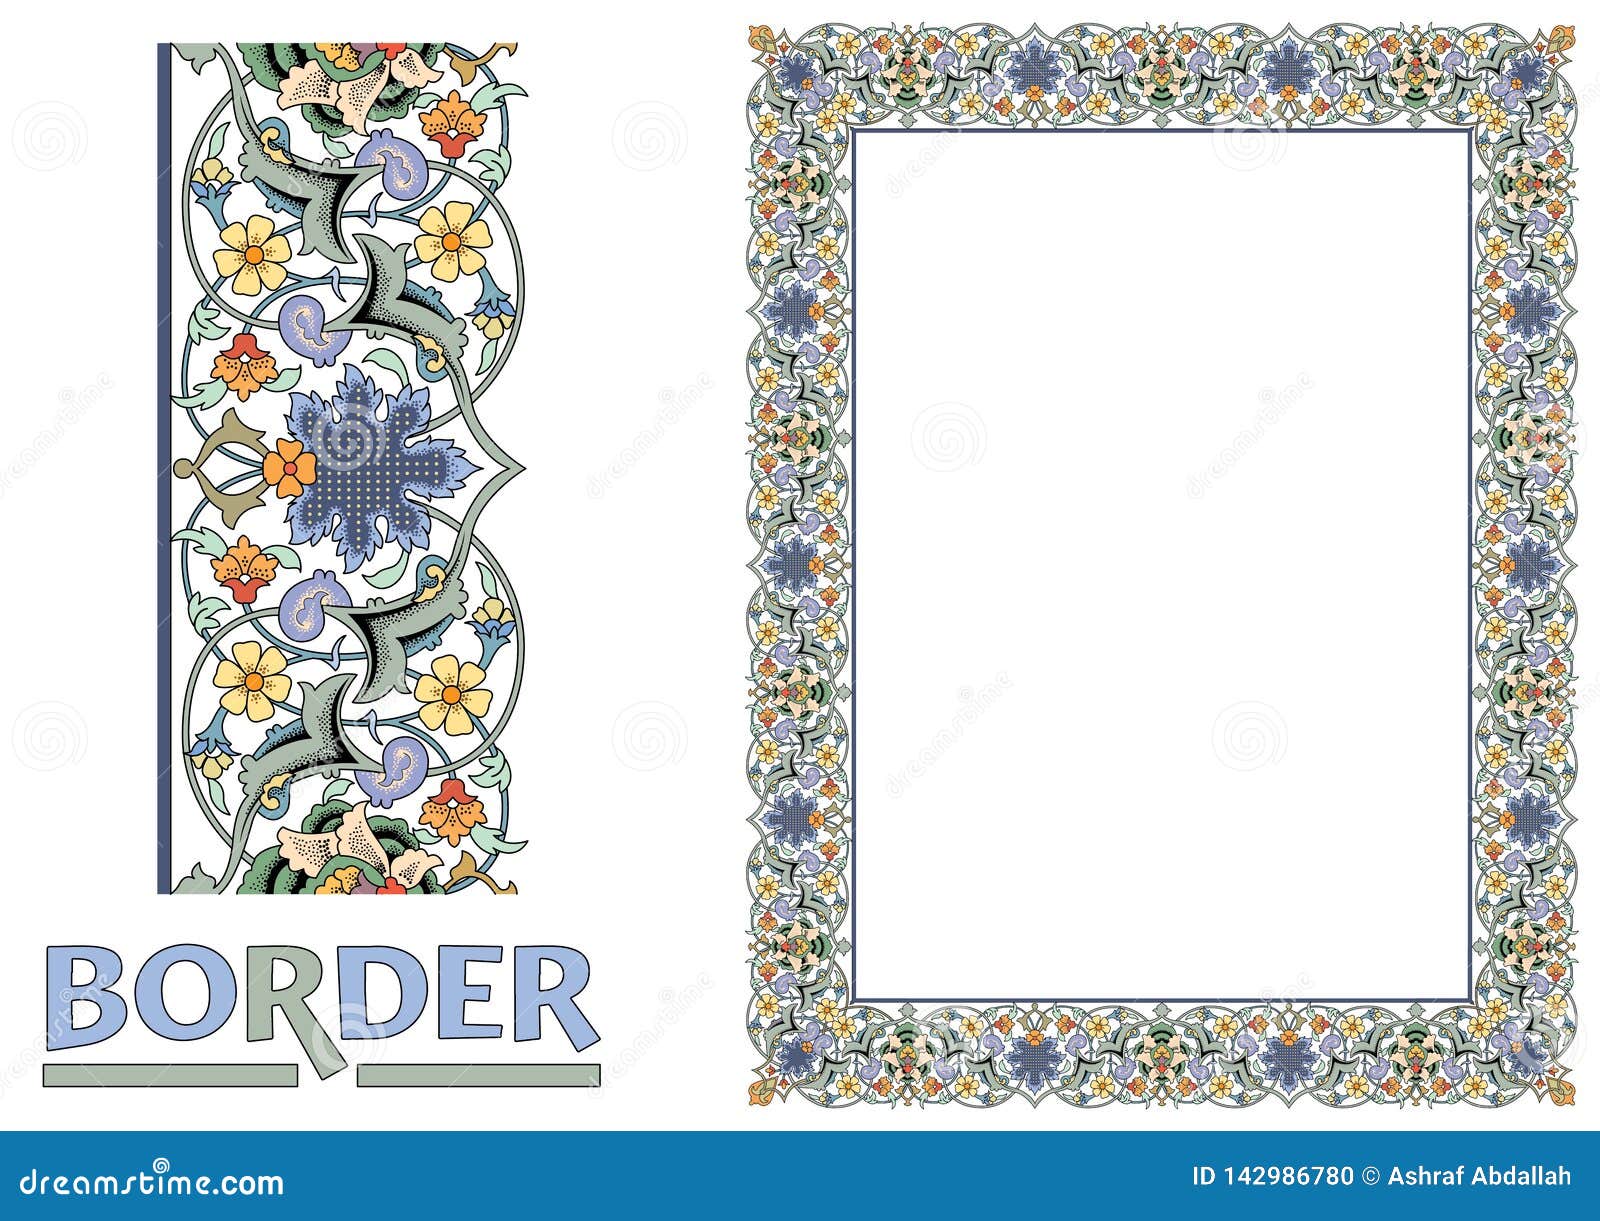 old world borders  - tiled frame in plant leaves and flowers framework decorative elegant style